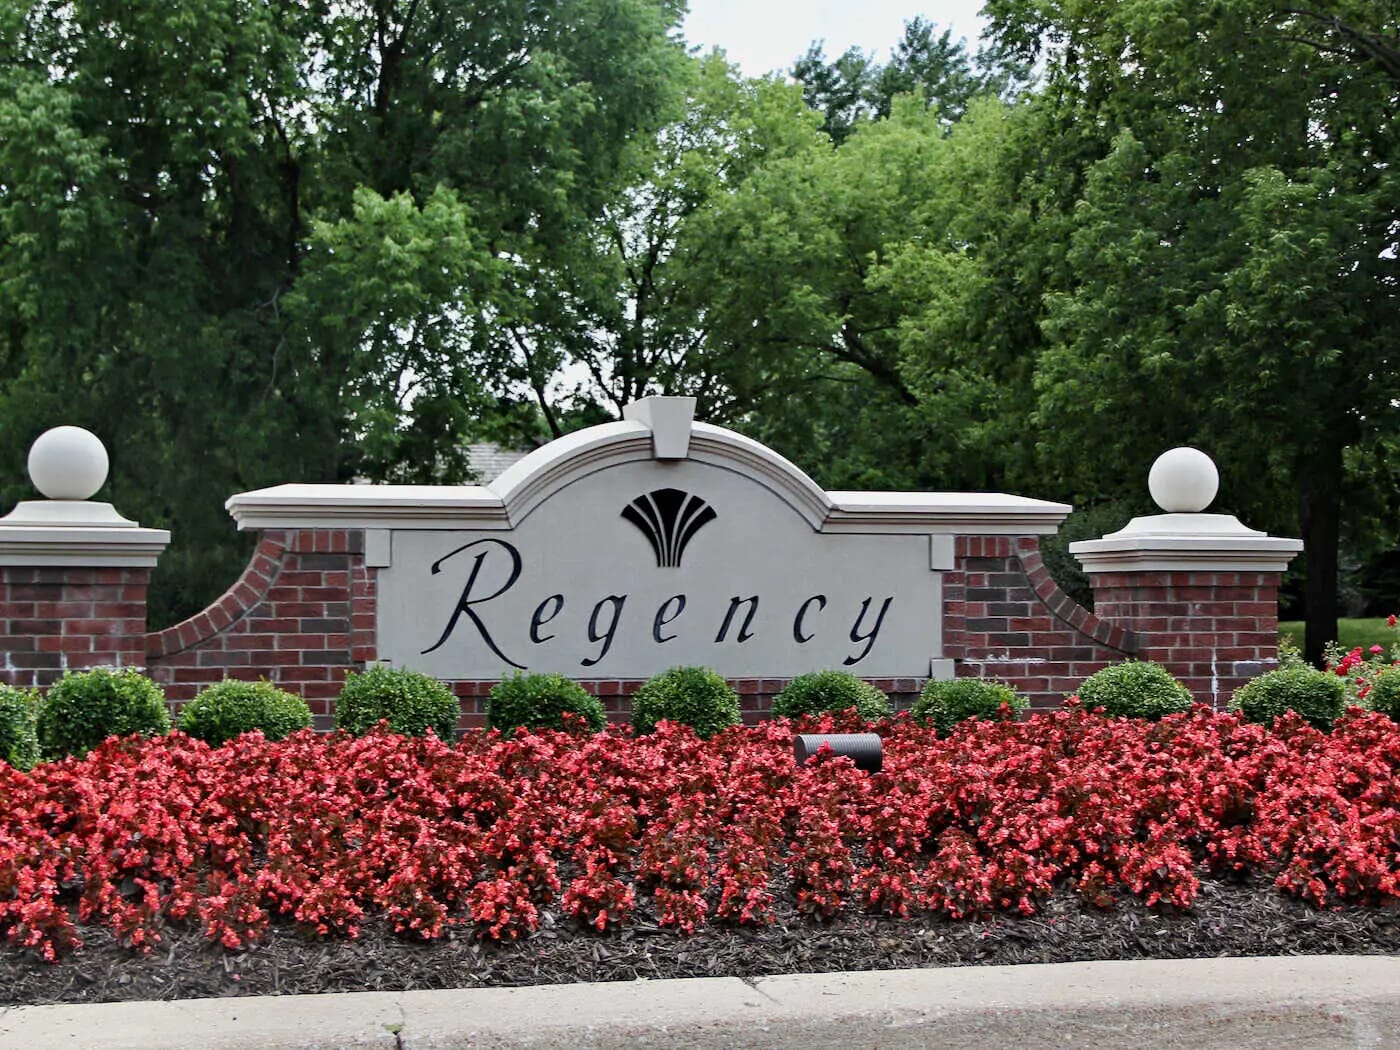 Regency Neighborhood - Omaha, Nebraska